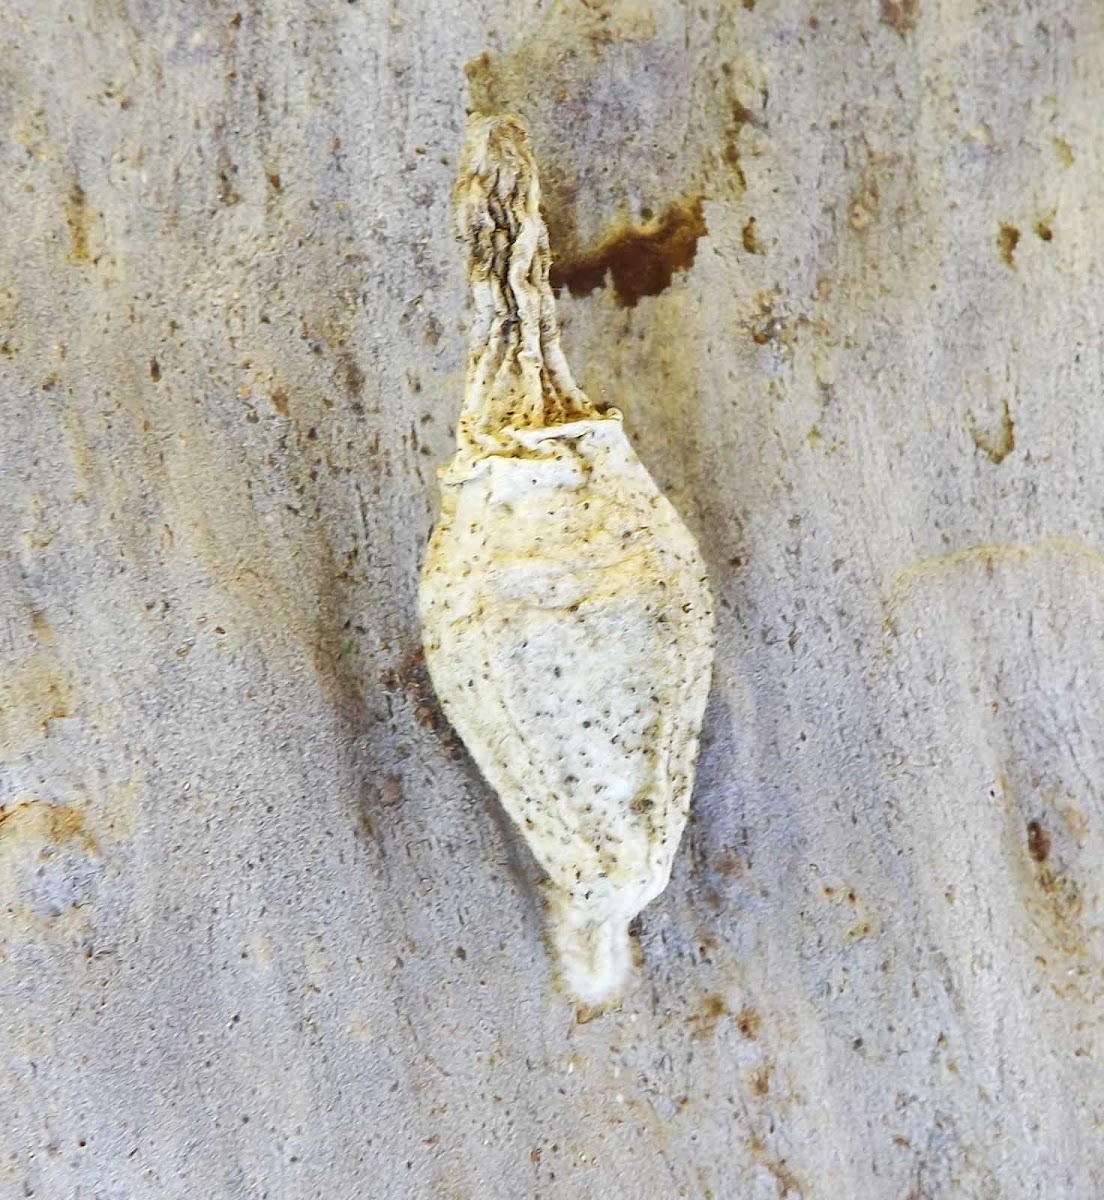 Ribbed Case Moth